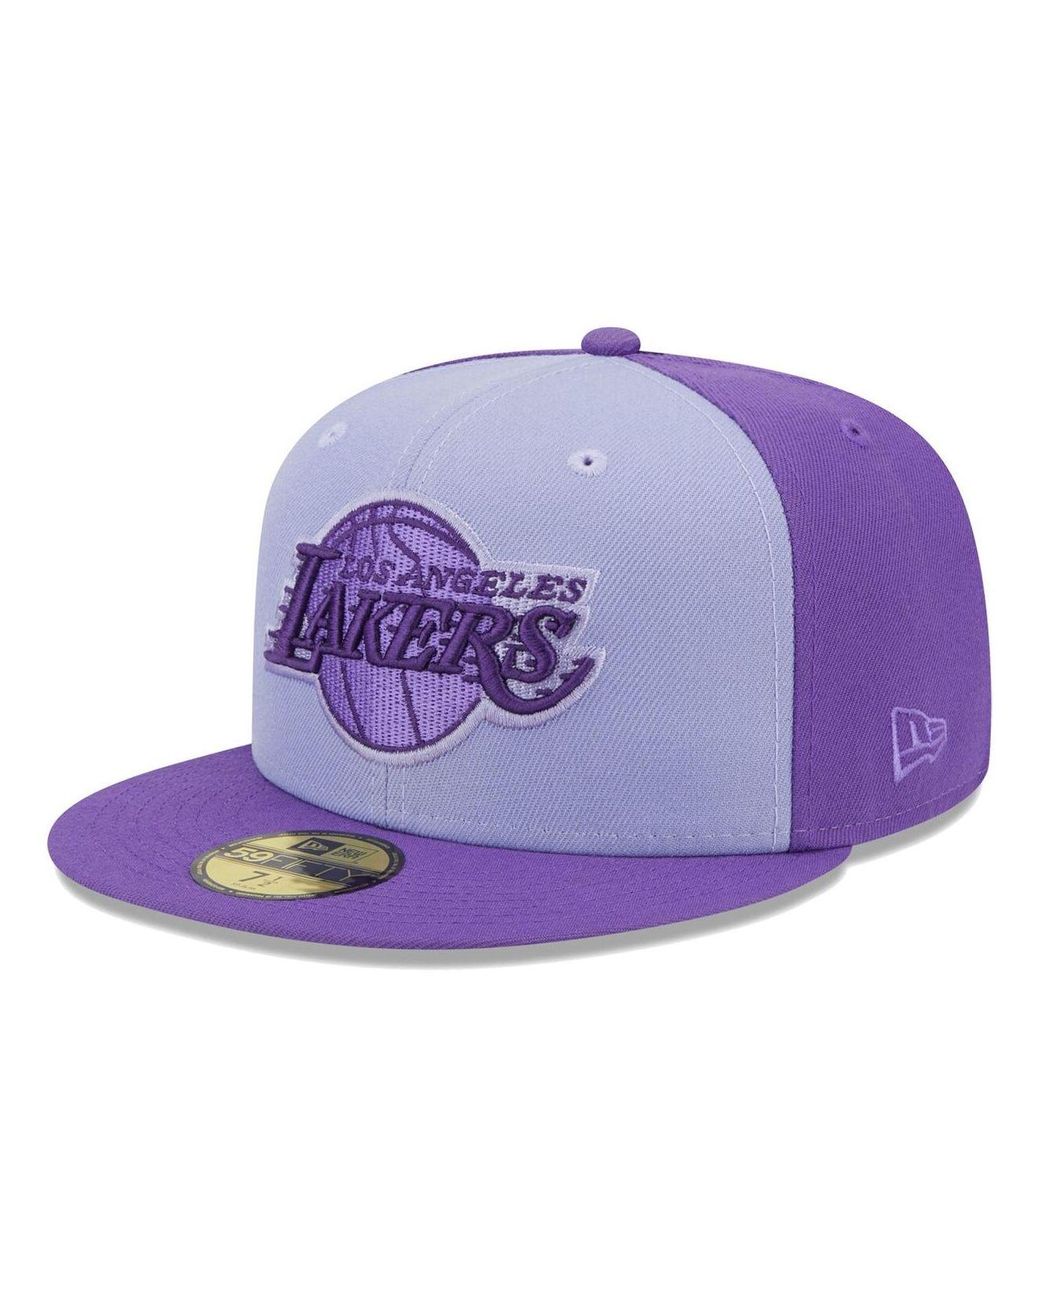 Los Angeles Lakers NBA Draft 9FIFTY White/Purple Snapback - New Era cap